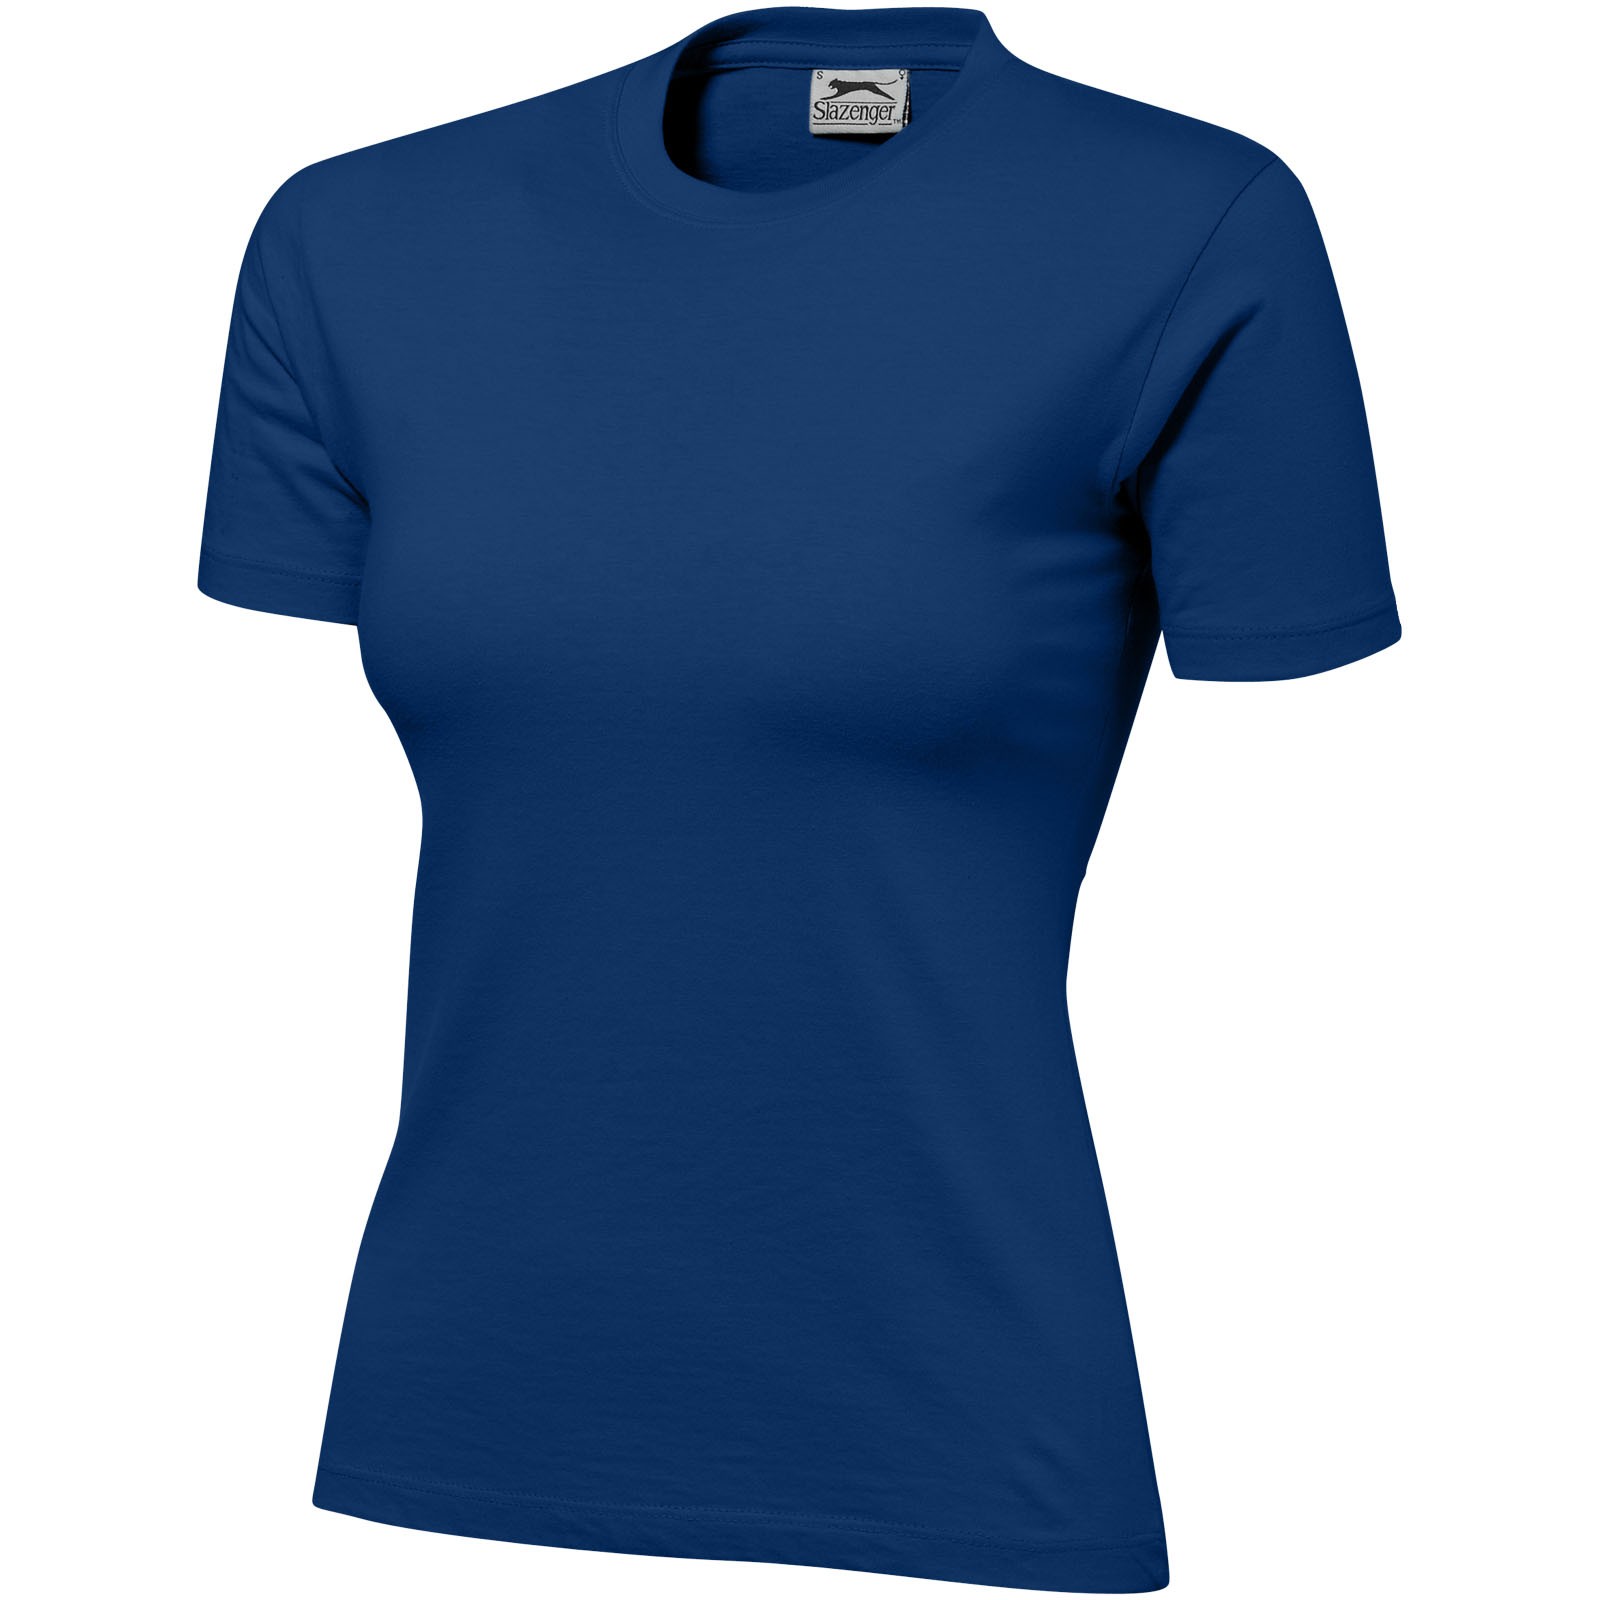 Camiseta de manga corta para mujer "Ace" - Azul real clásico / L